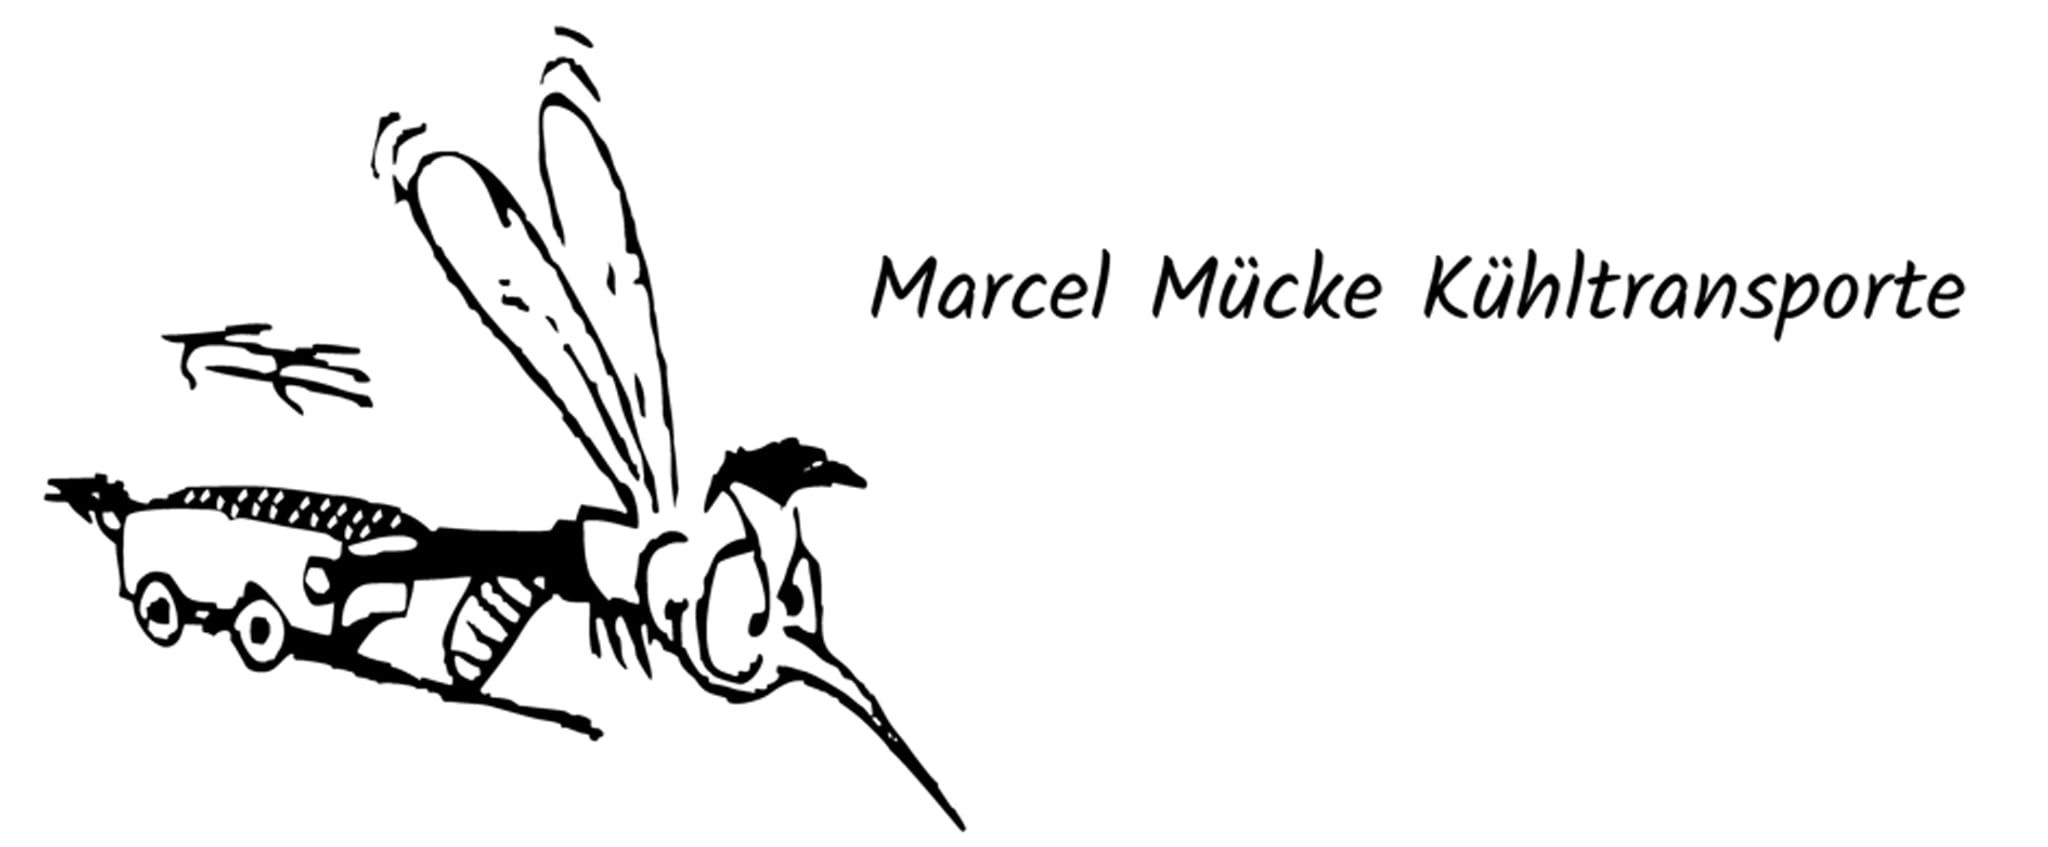 Marcel Mücke Kühltransporte